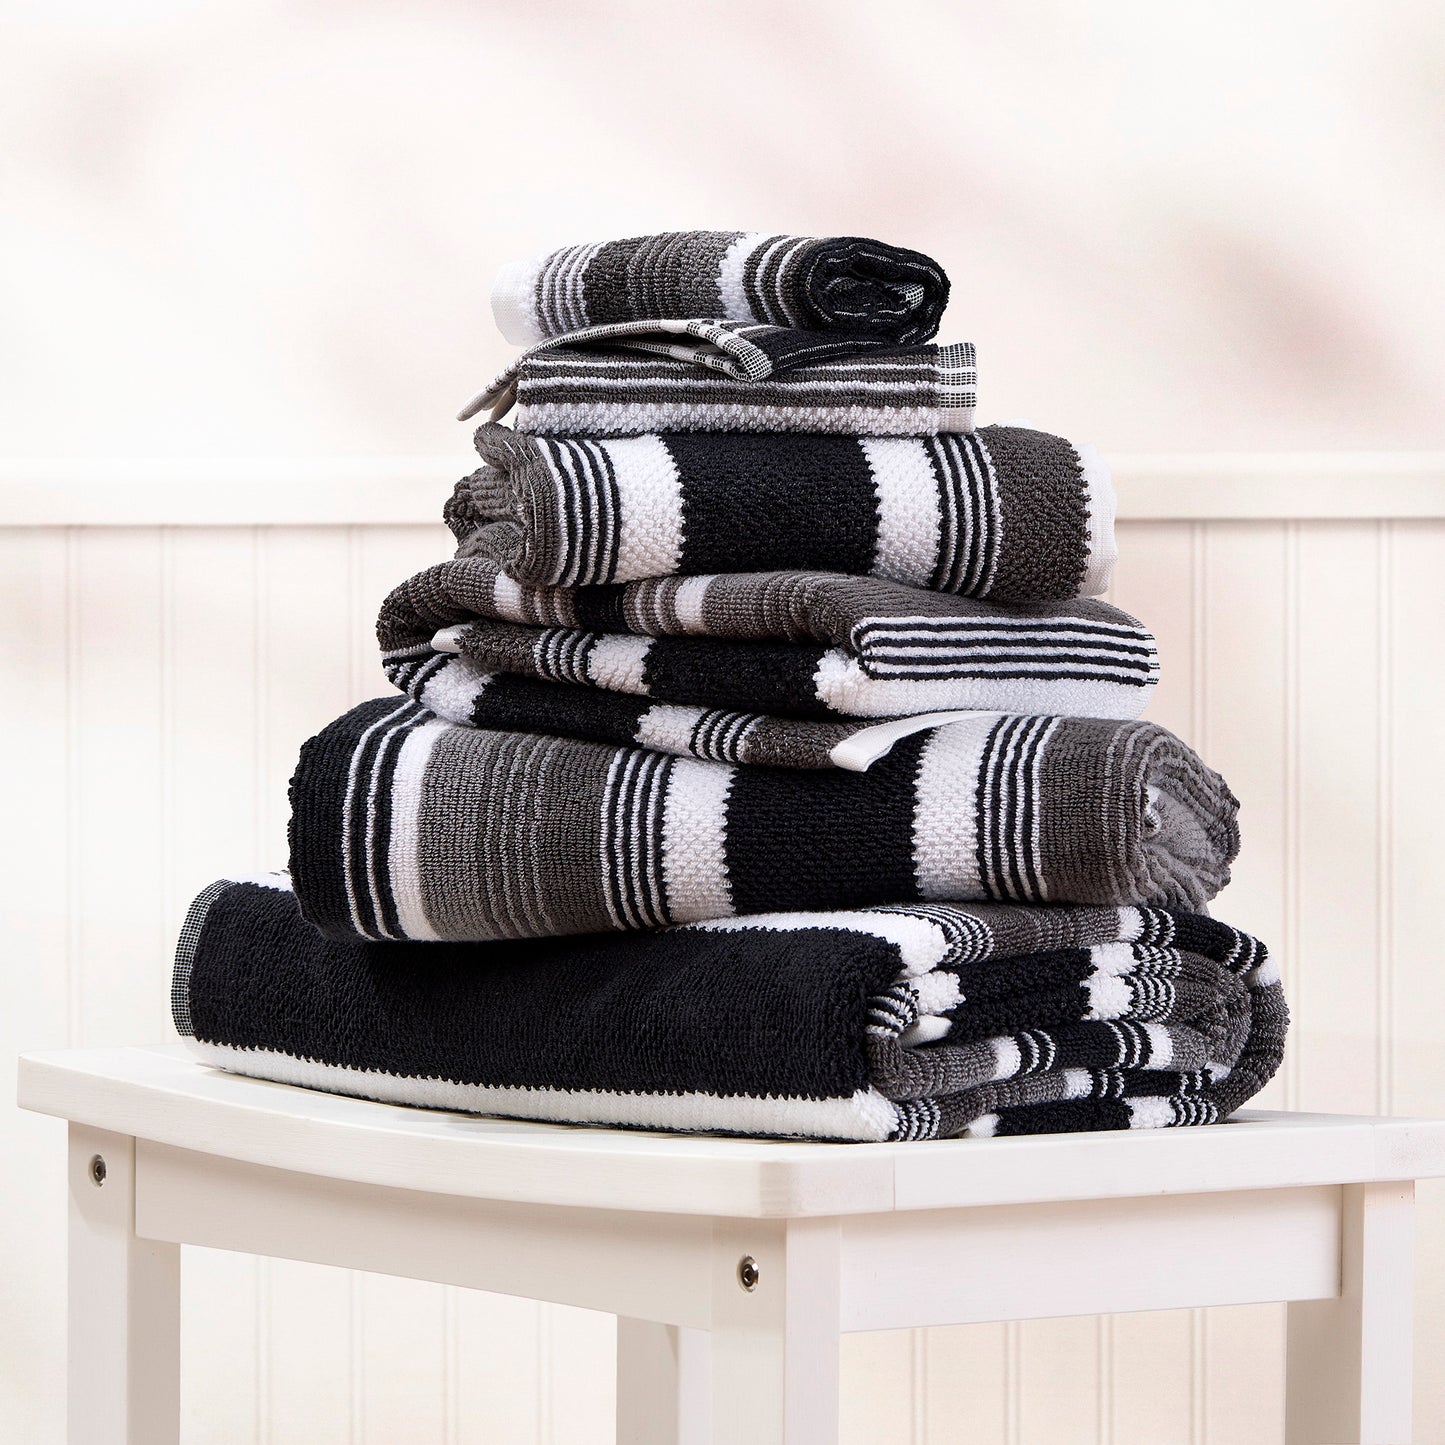 Montauk 6-Piece Towel Set: The Natural Modern